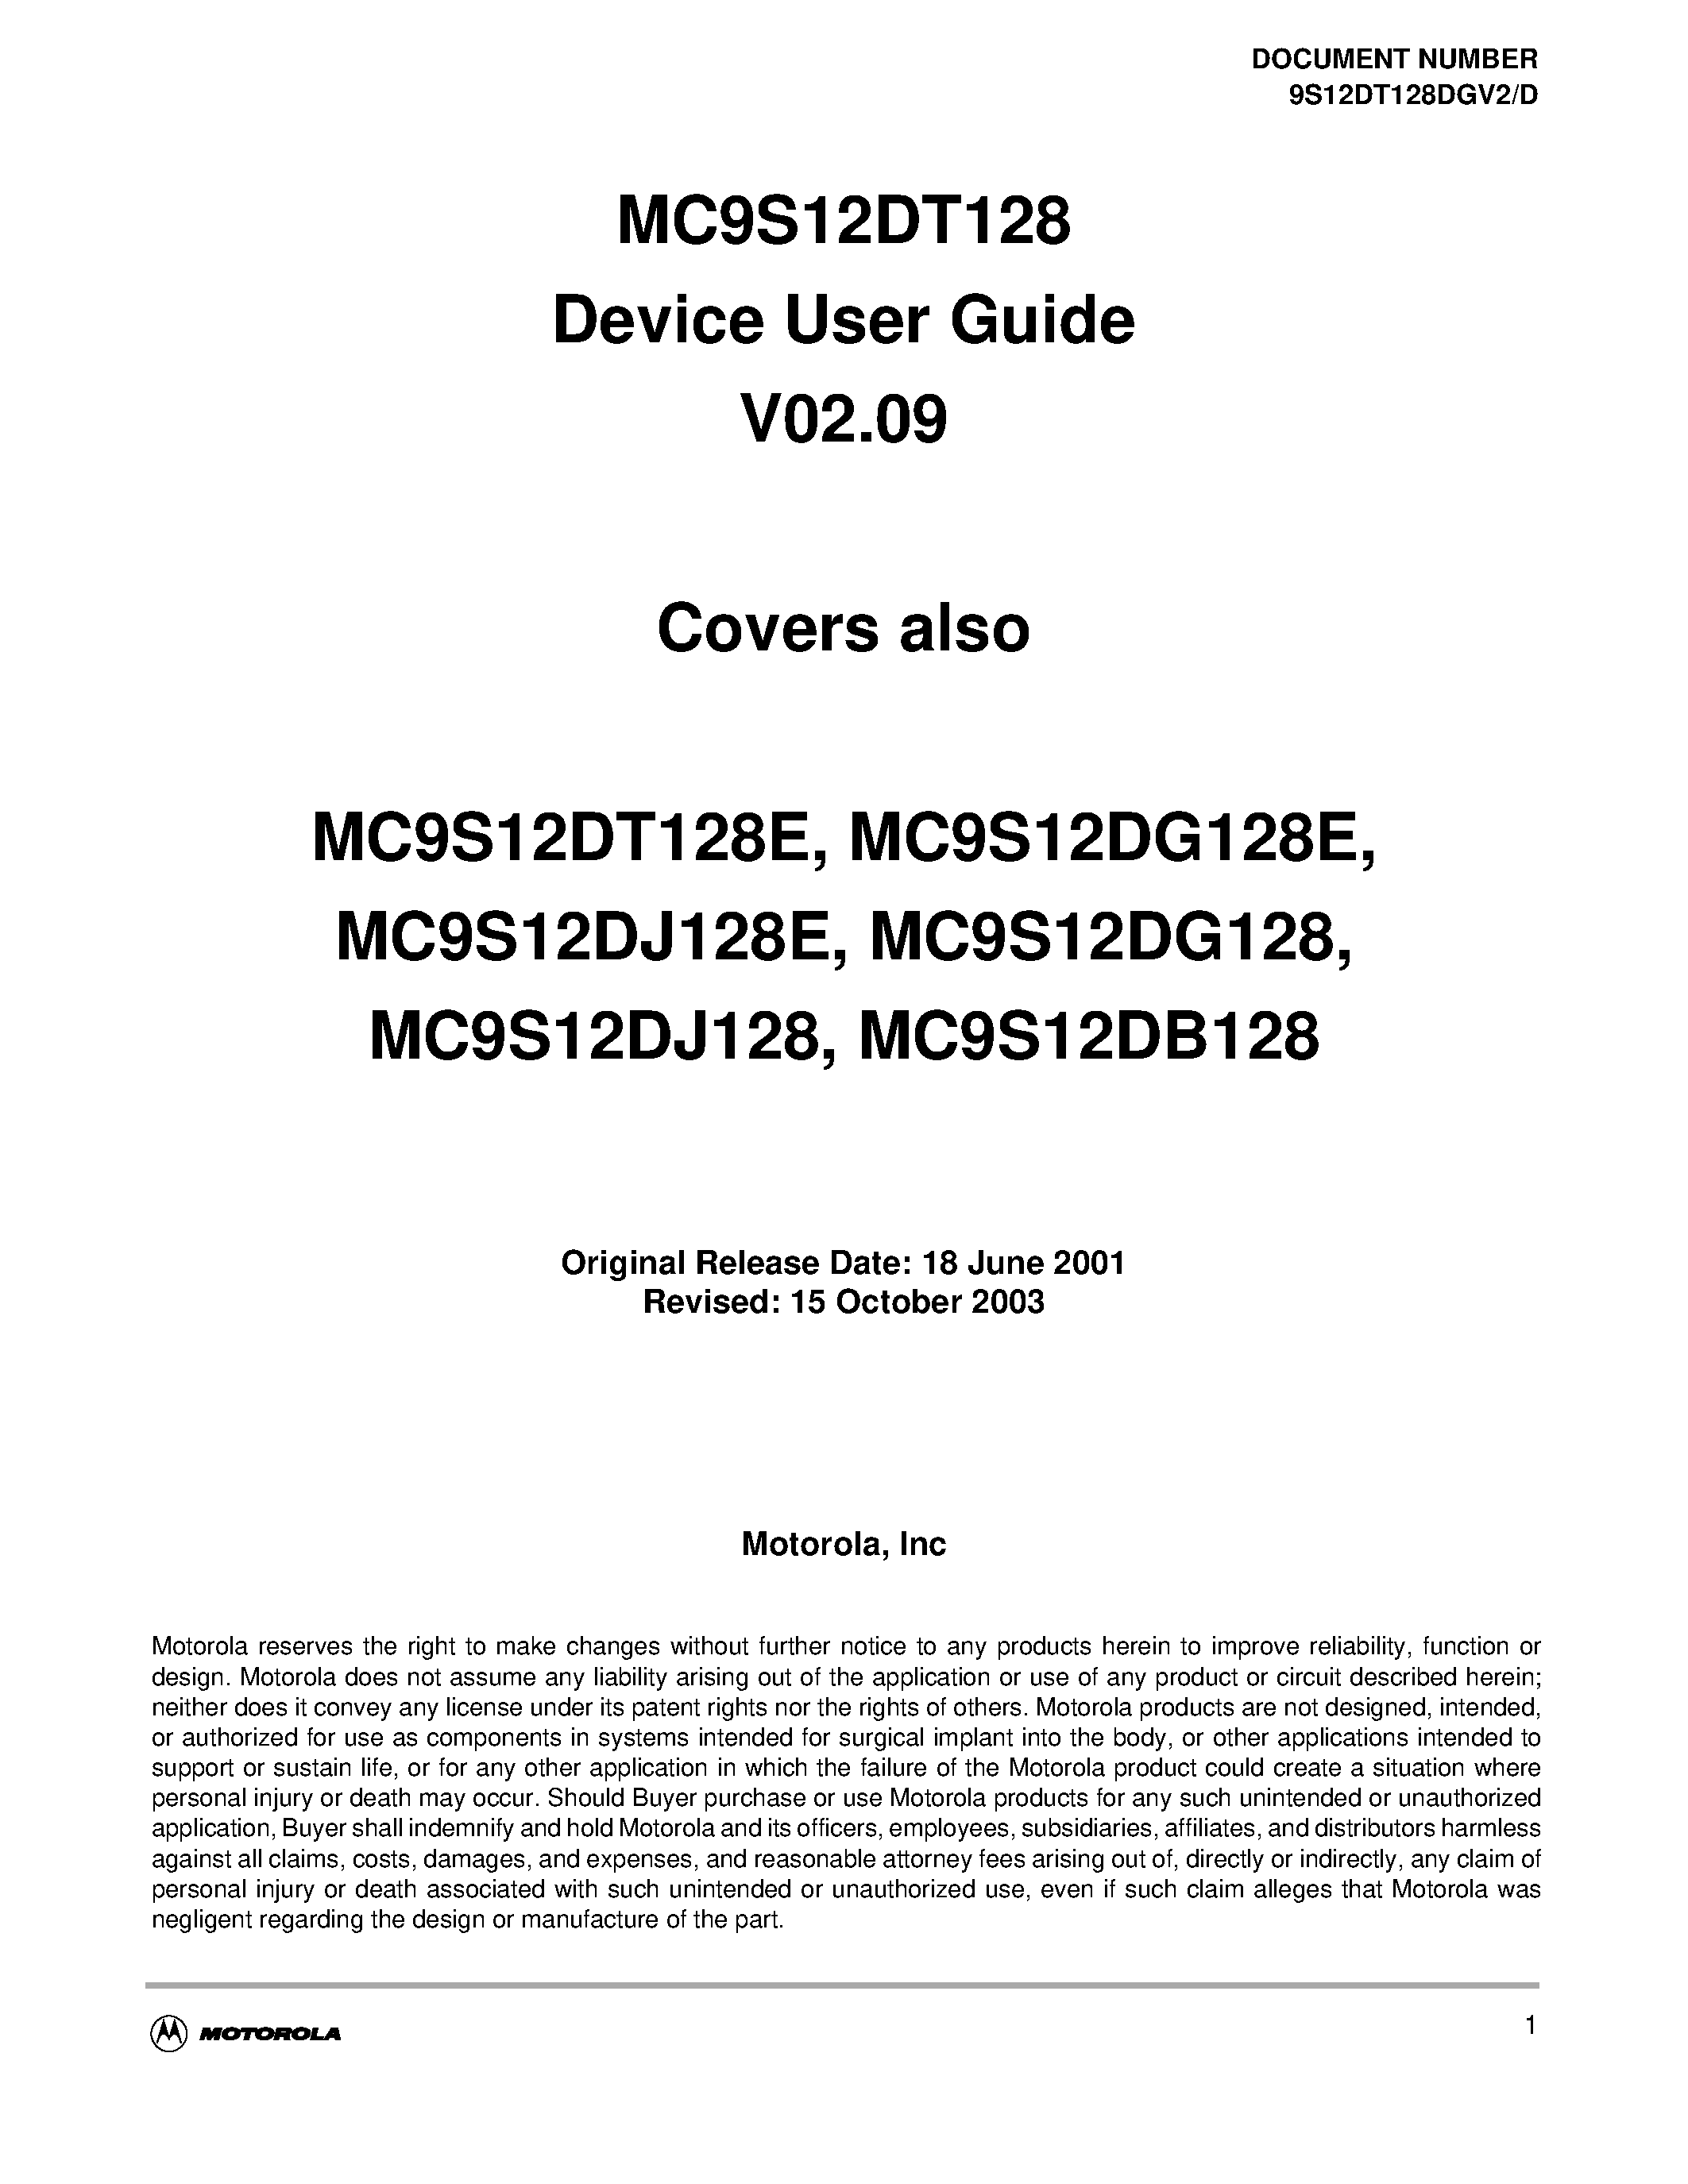 Datasheet S12VREGV1D - MC9S12DT128 Device User Guide V02.09 page 1